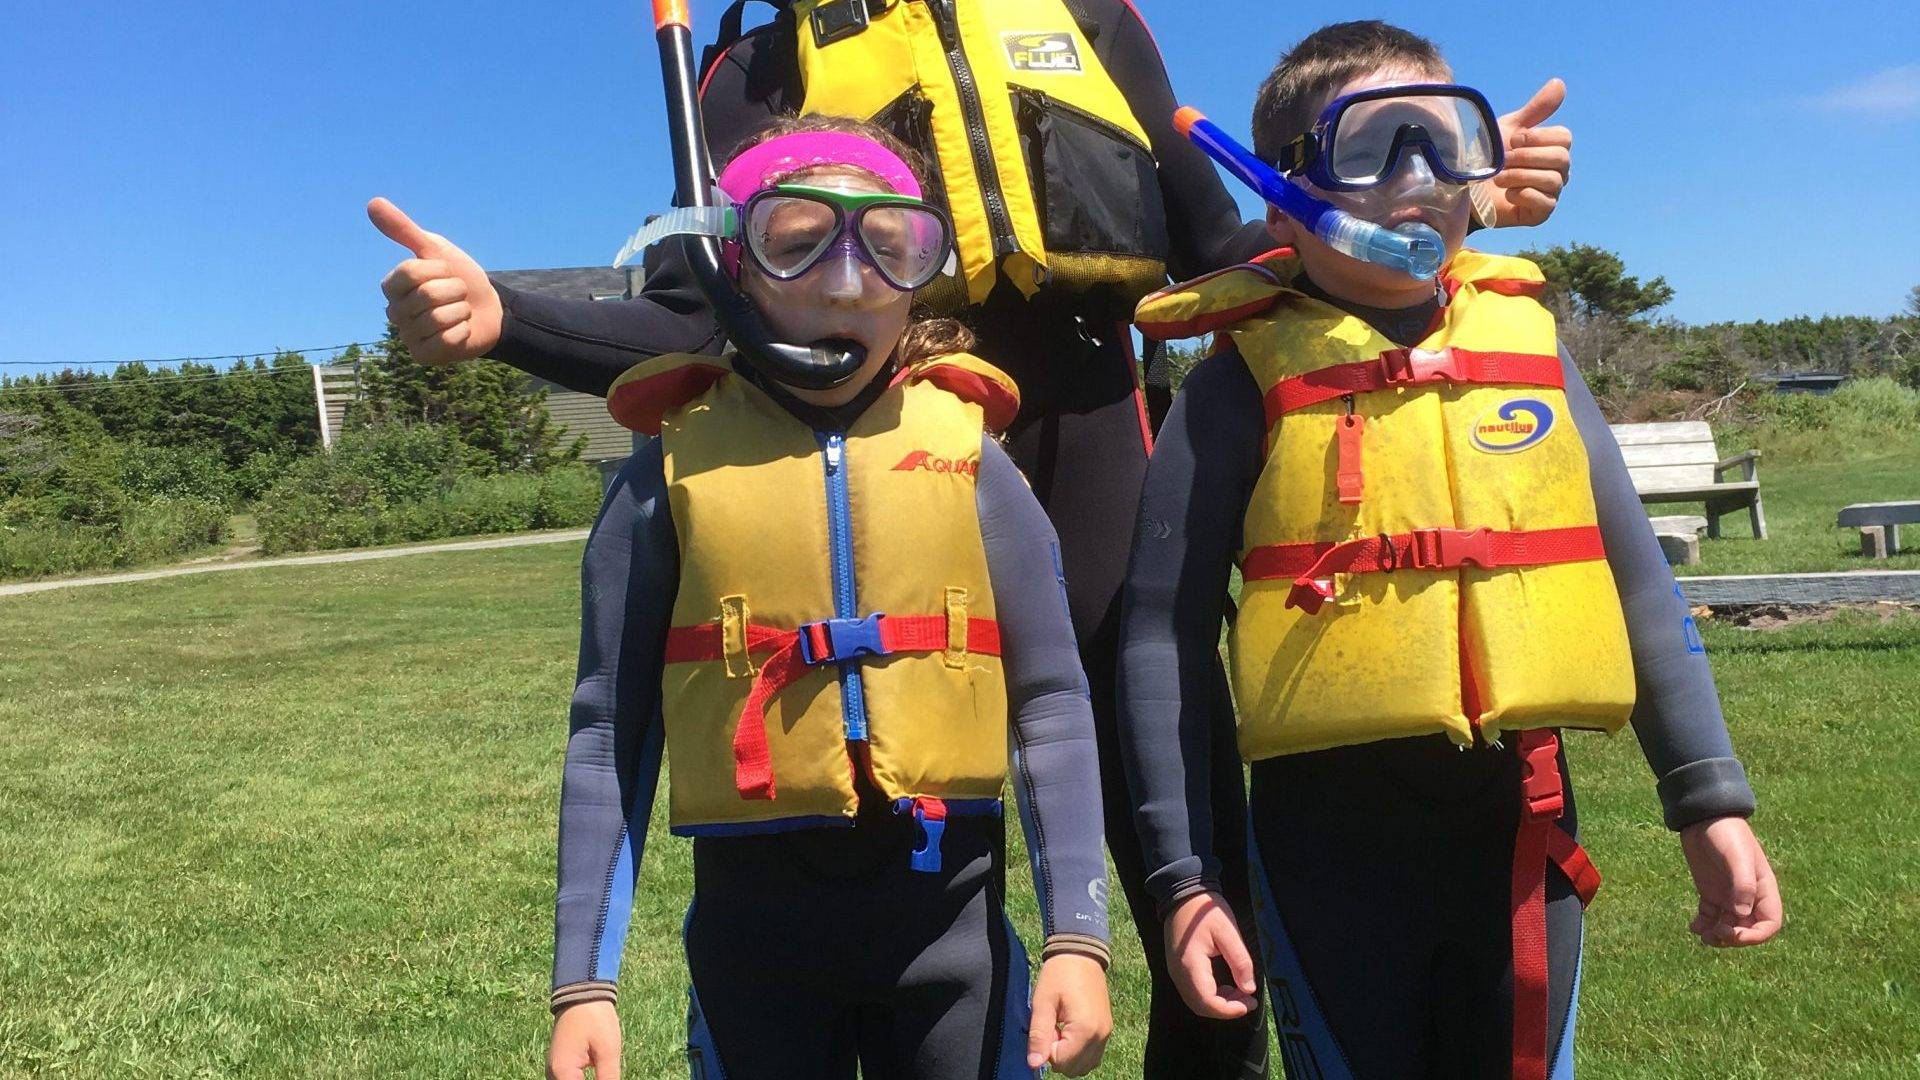 Children with snorkeling equipment